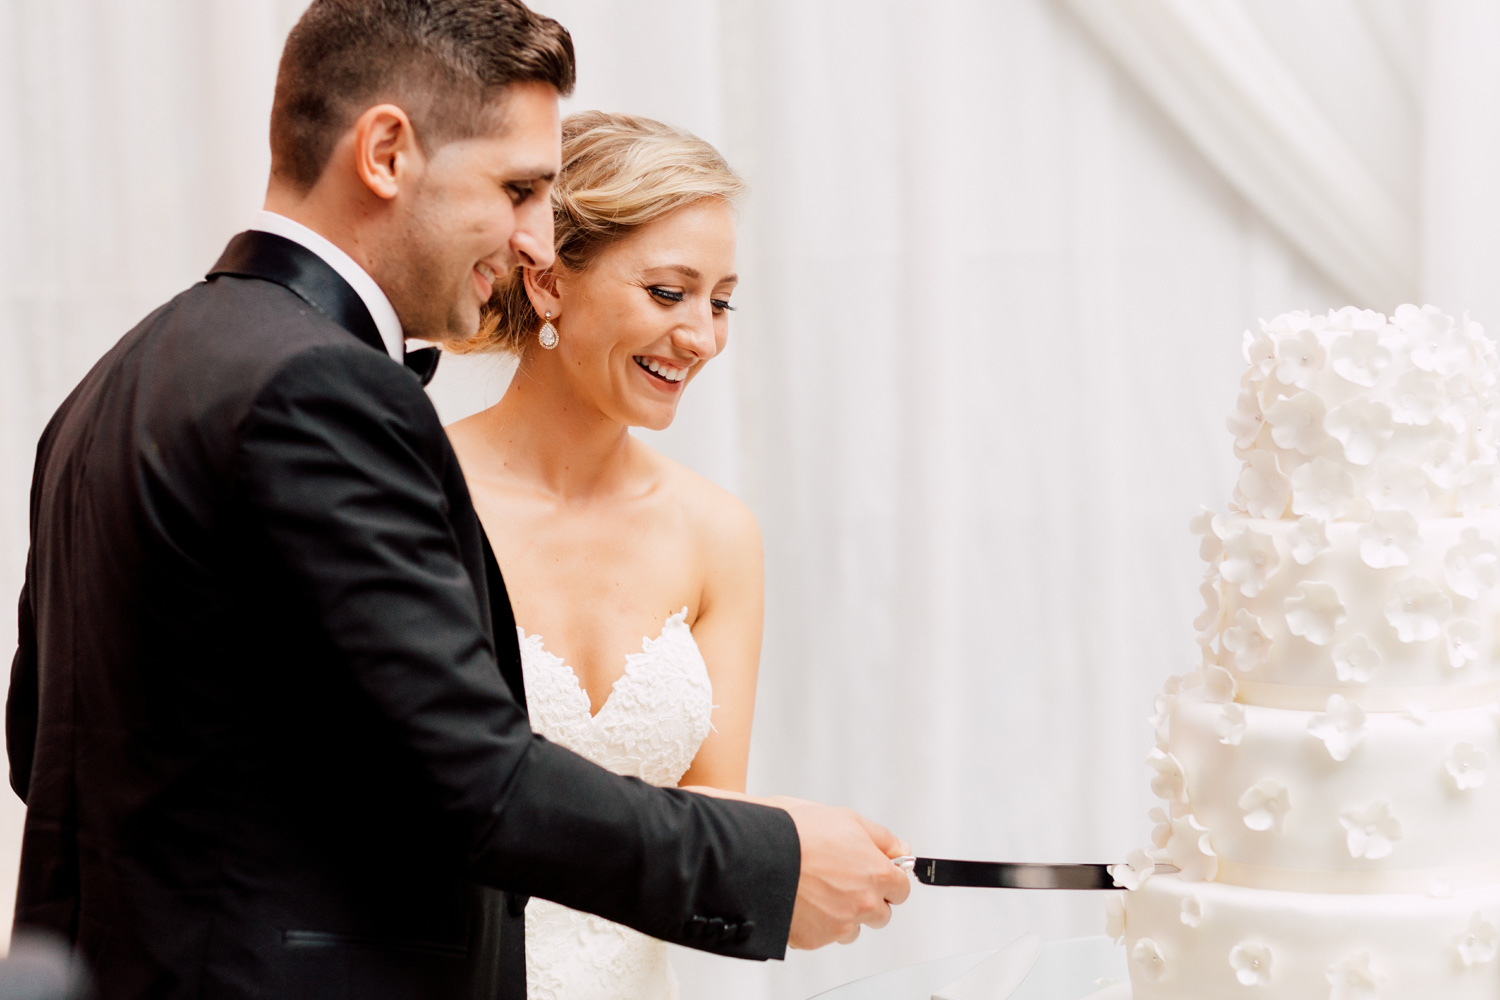 wedding reception cake